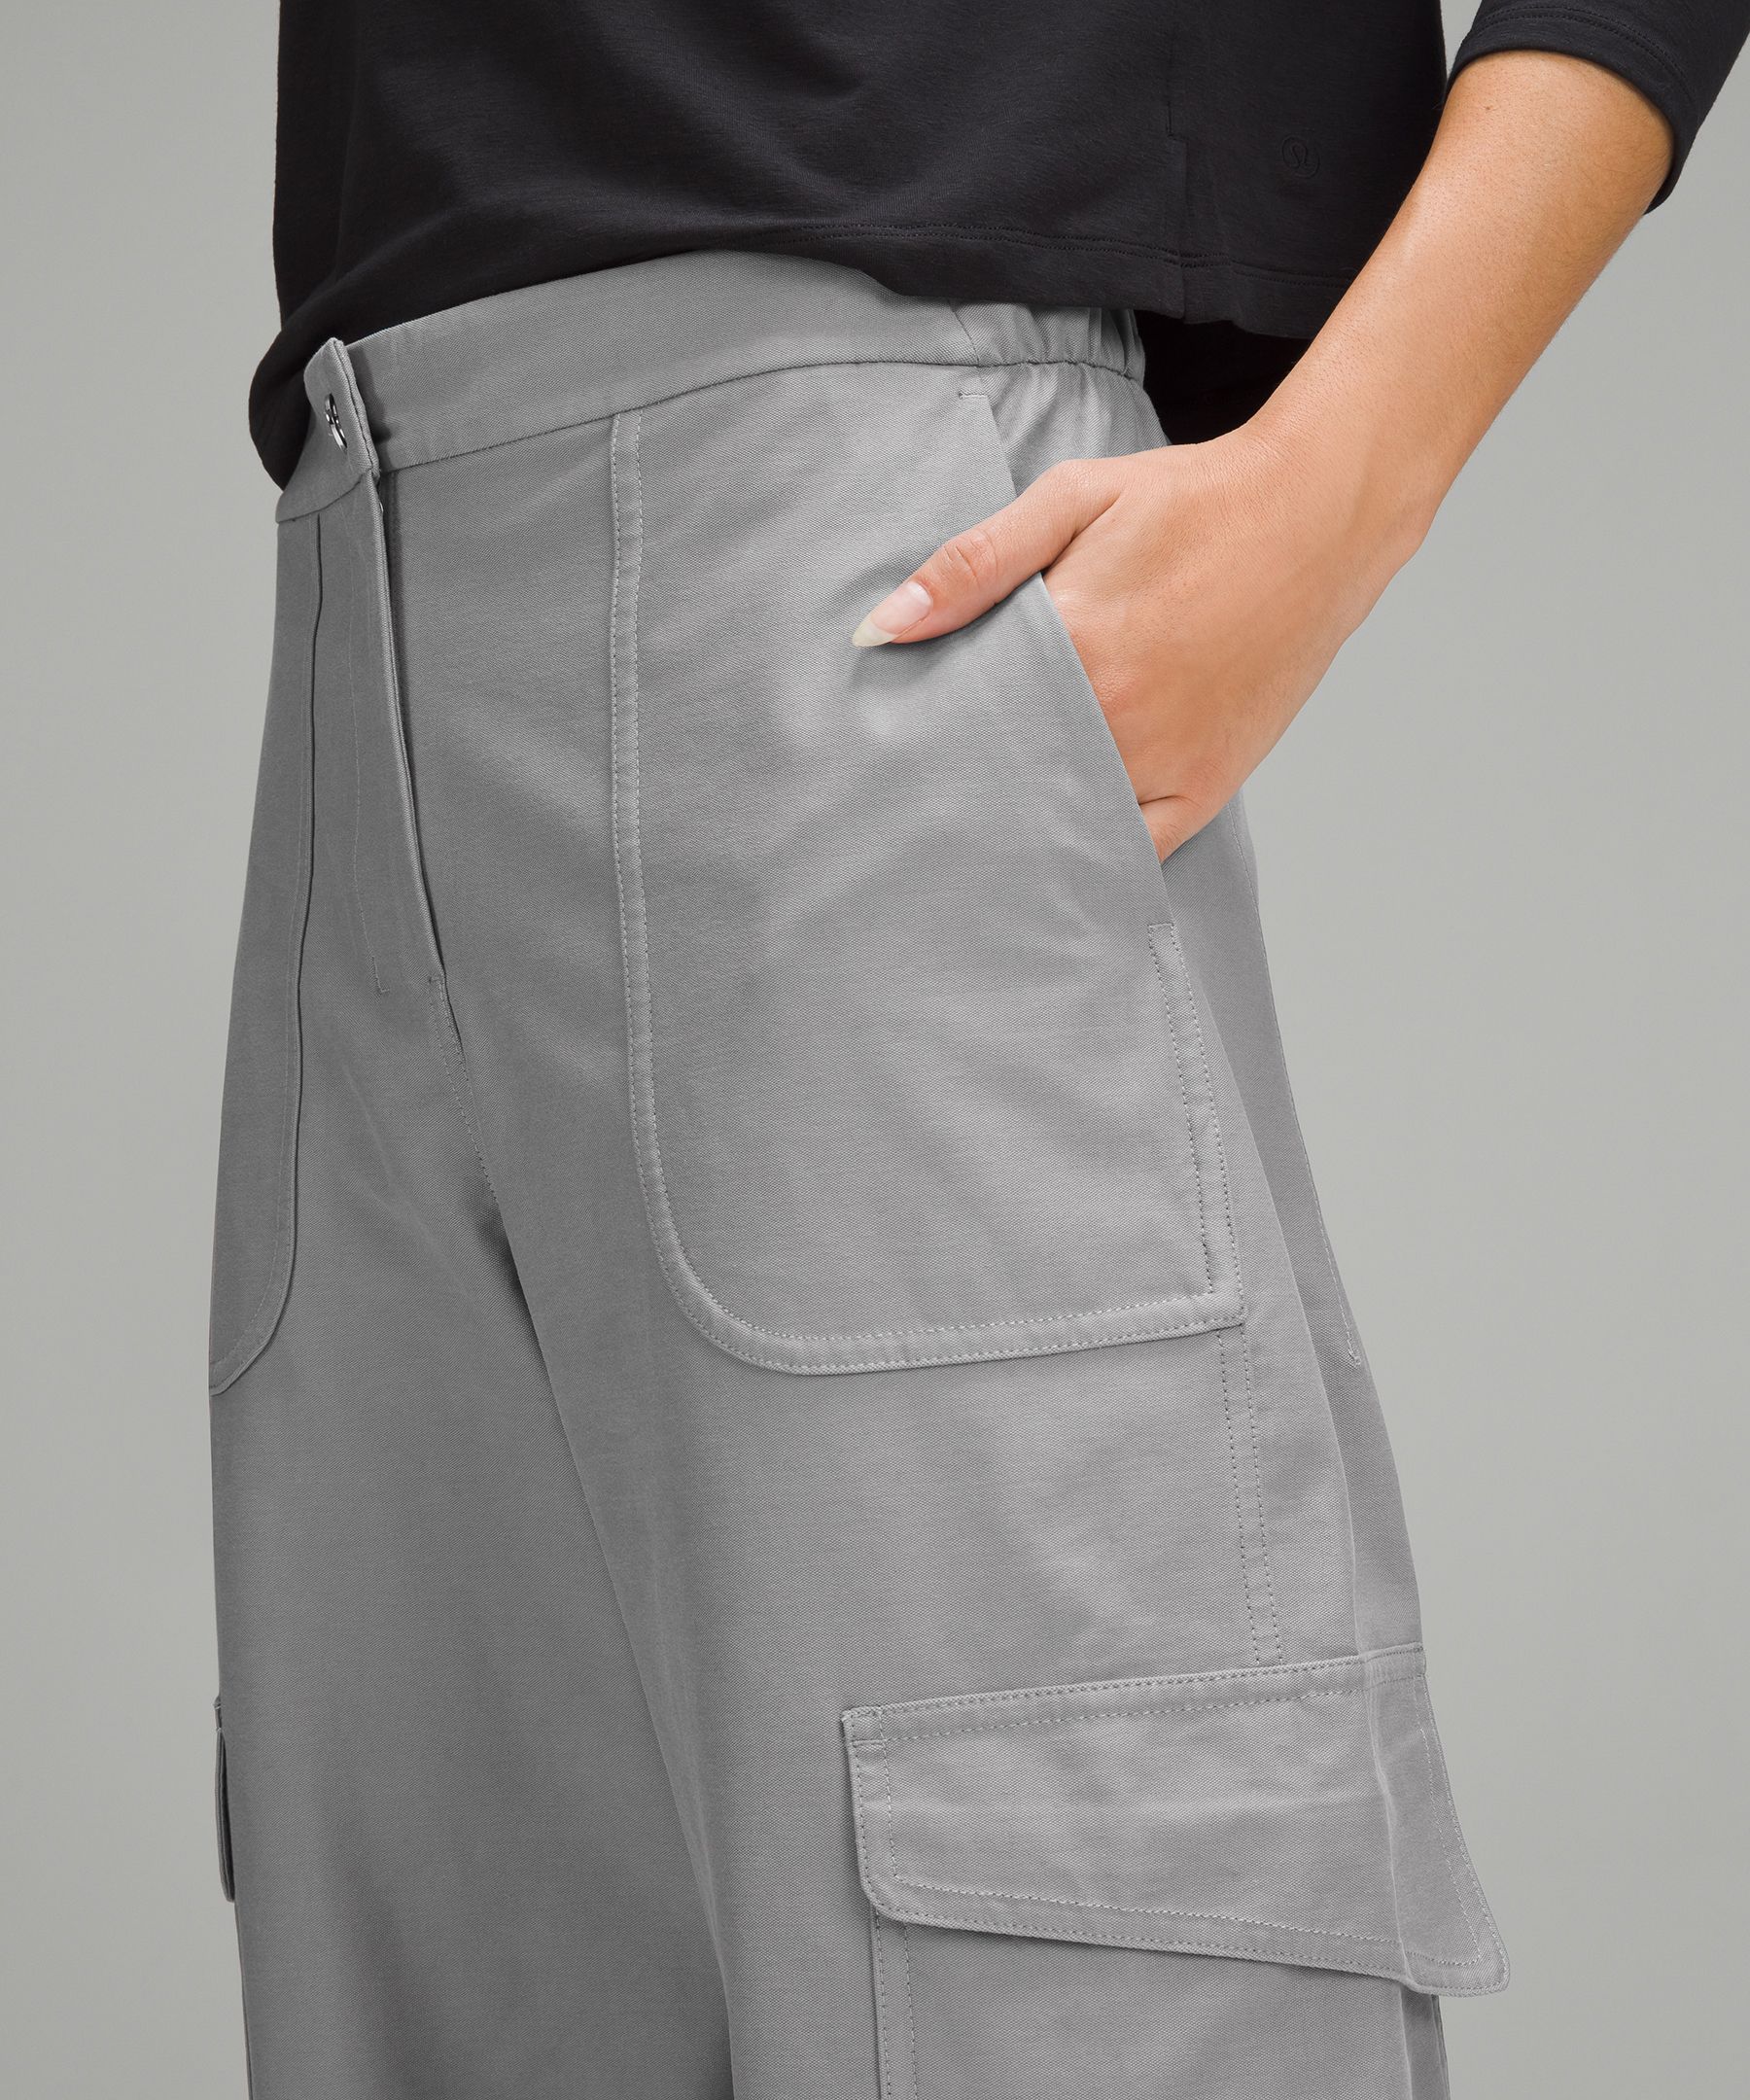 Lululemon athletica Light Utilitech Cargo Pocket High-Rise Pant, Women's  Pants